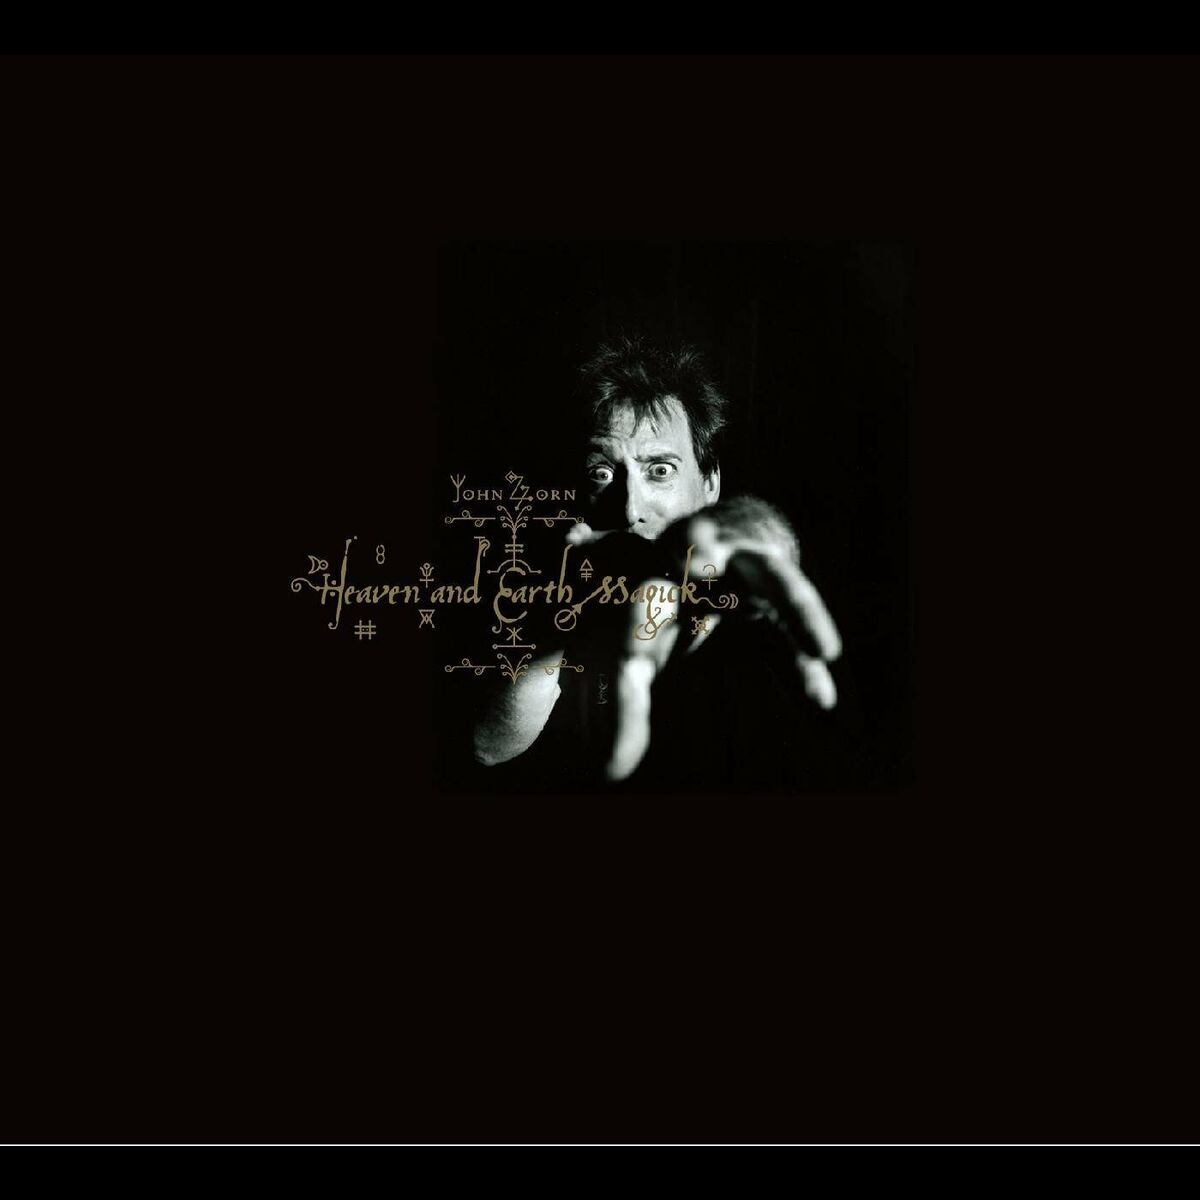 John Zorn: albums, songs, playlists | Listen on Deezer